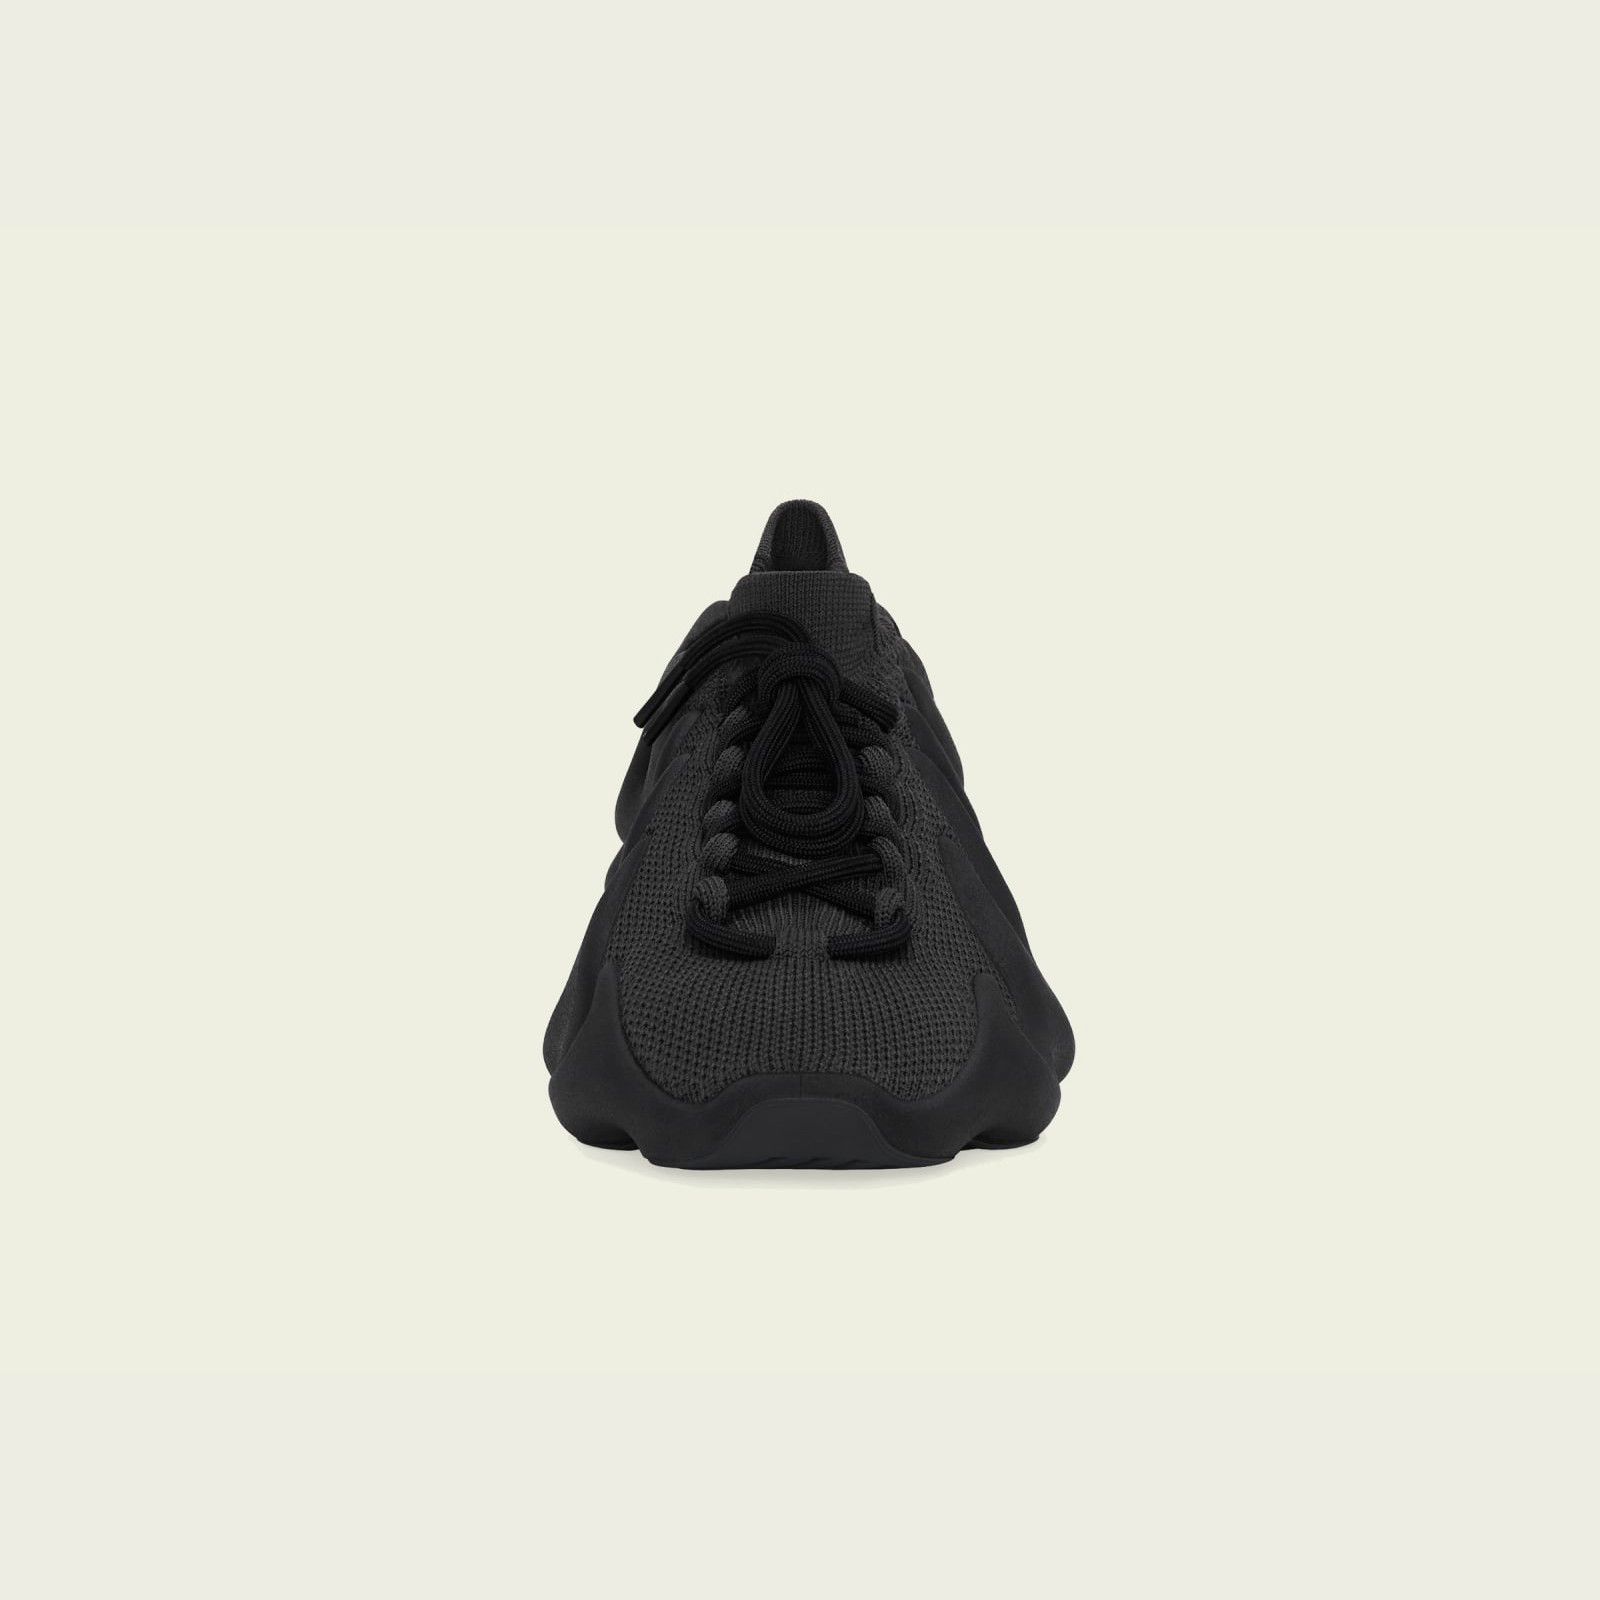 Adidas Yeezy 450
« Dark Slate »